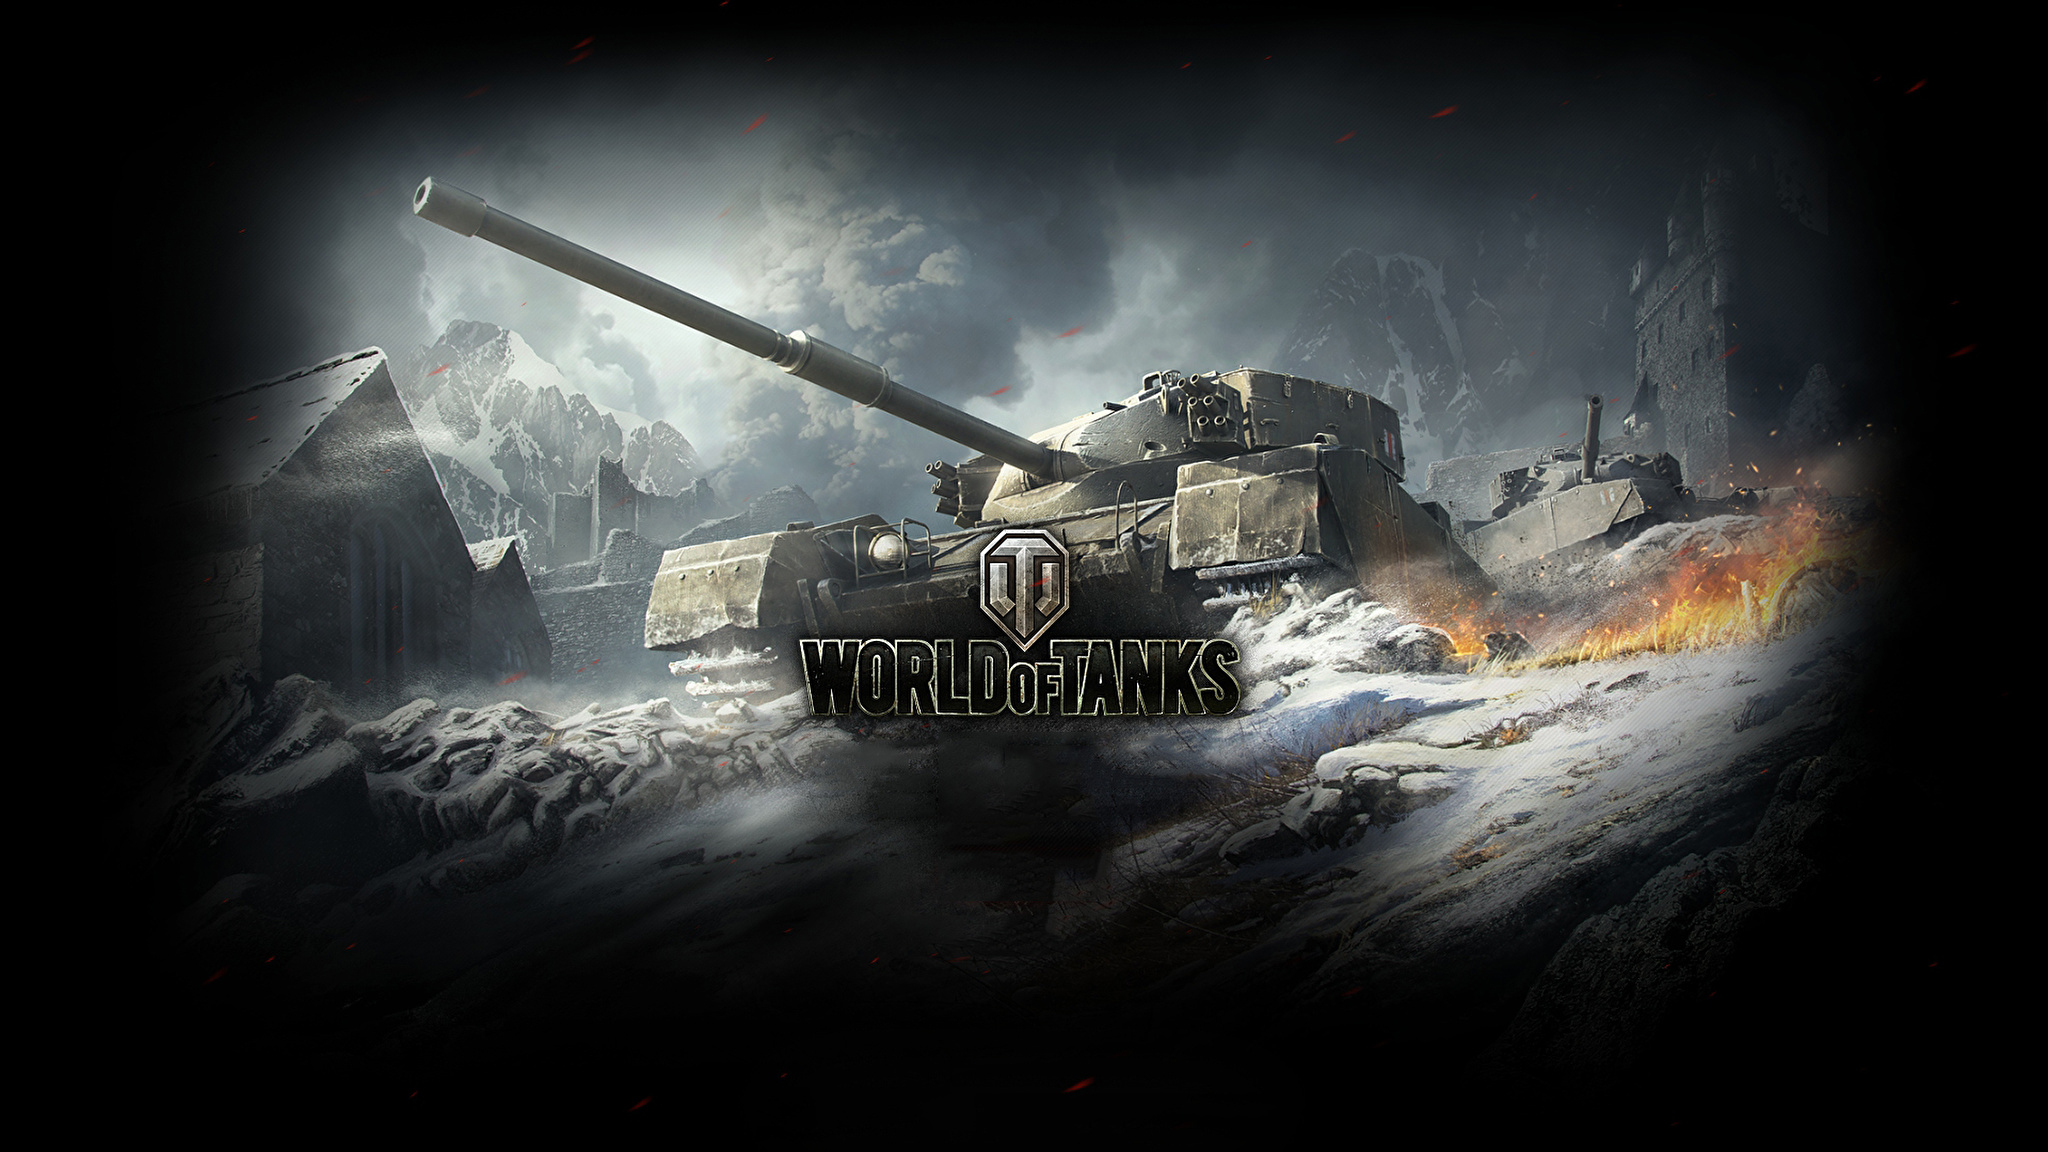 Пинги world of tank. Танки ворлд оф танкс. Fv4202 WOT. World of Tanks загрузочный экран. Шапка для канала World of Tanks.